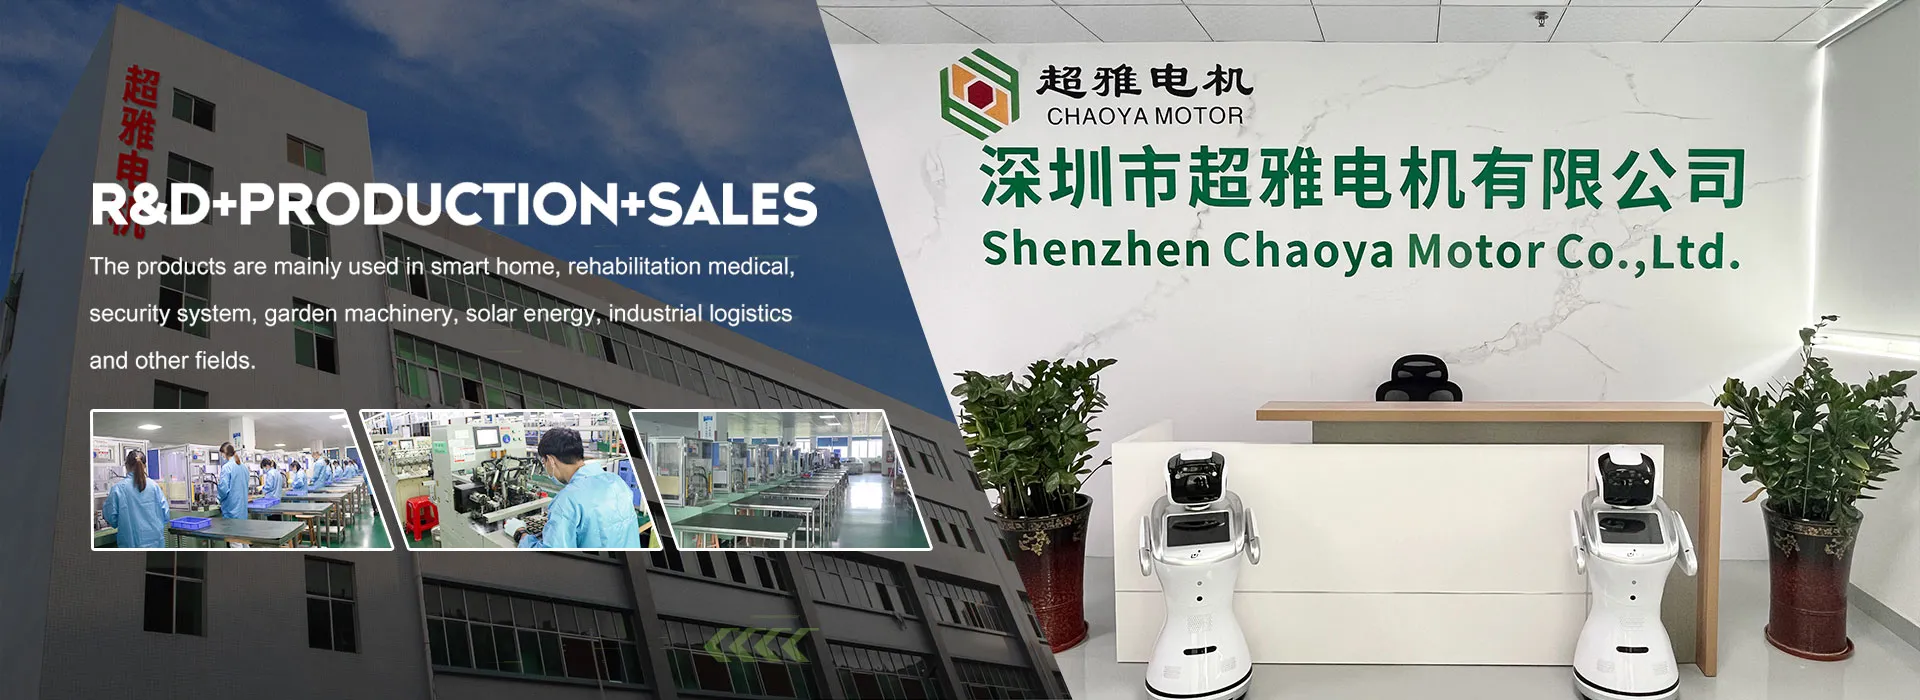 Shenzhen Chaoya Motor Co.,Ltd